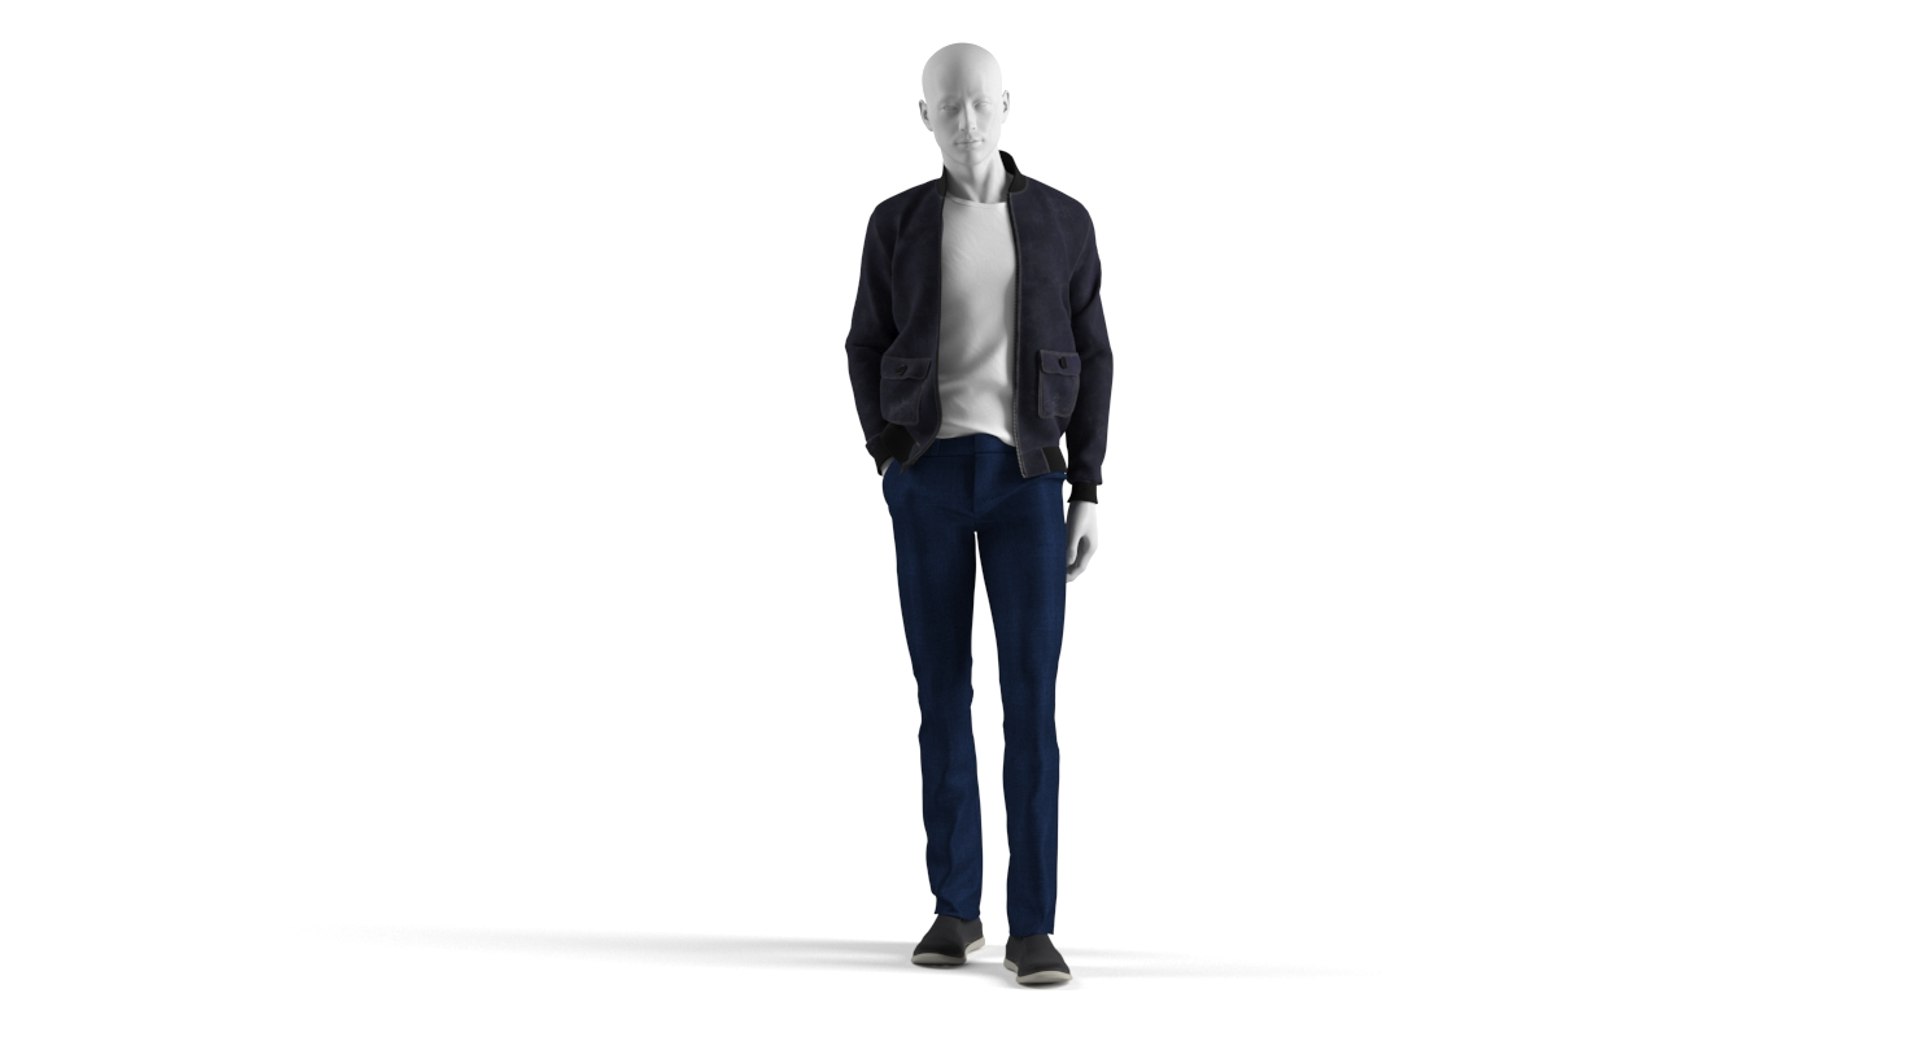 Realistic mannequin jacket 3D model - TurboSquid 1409917